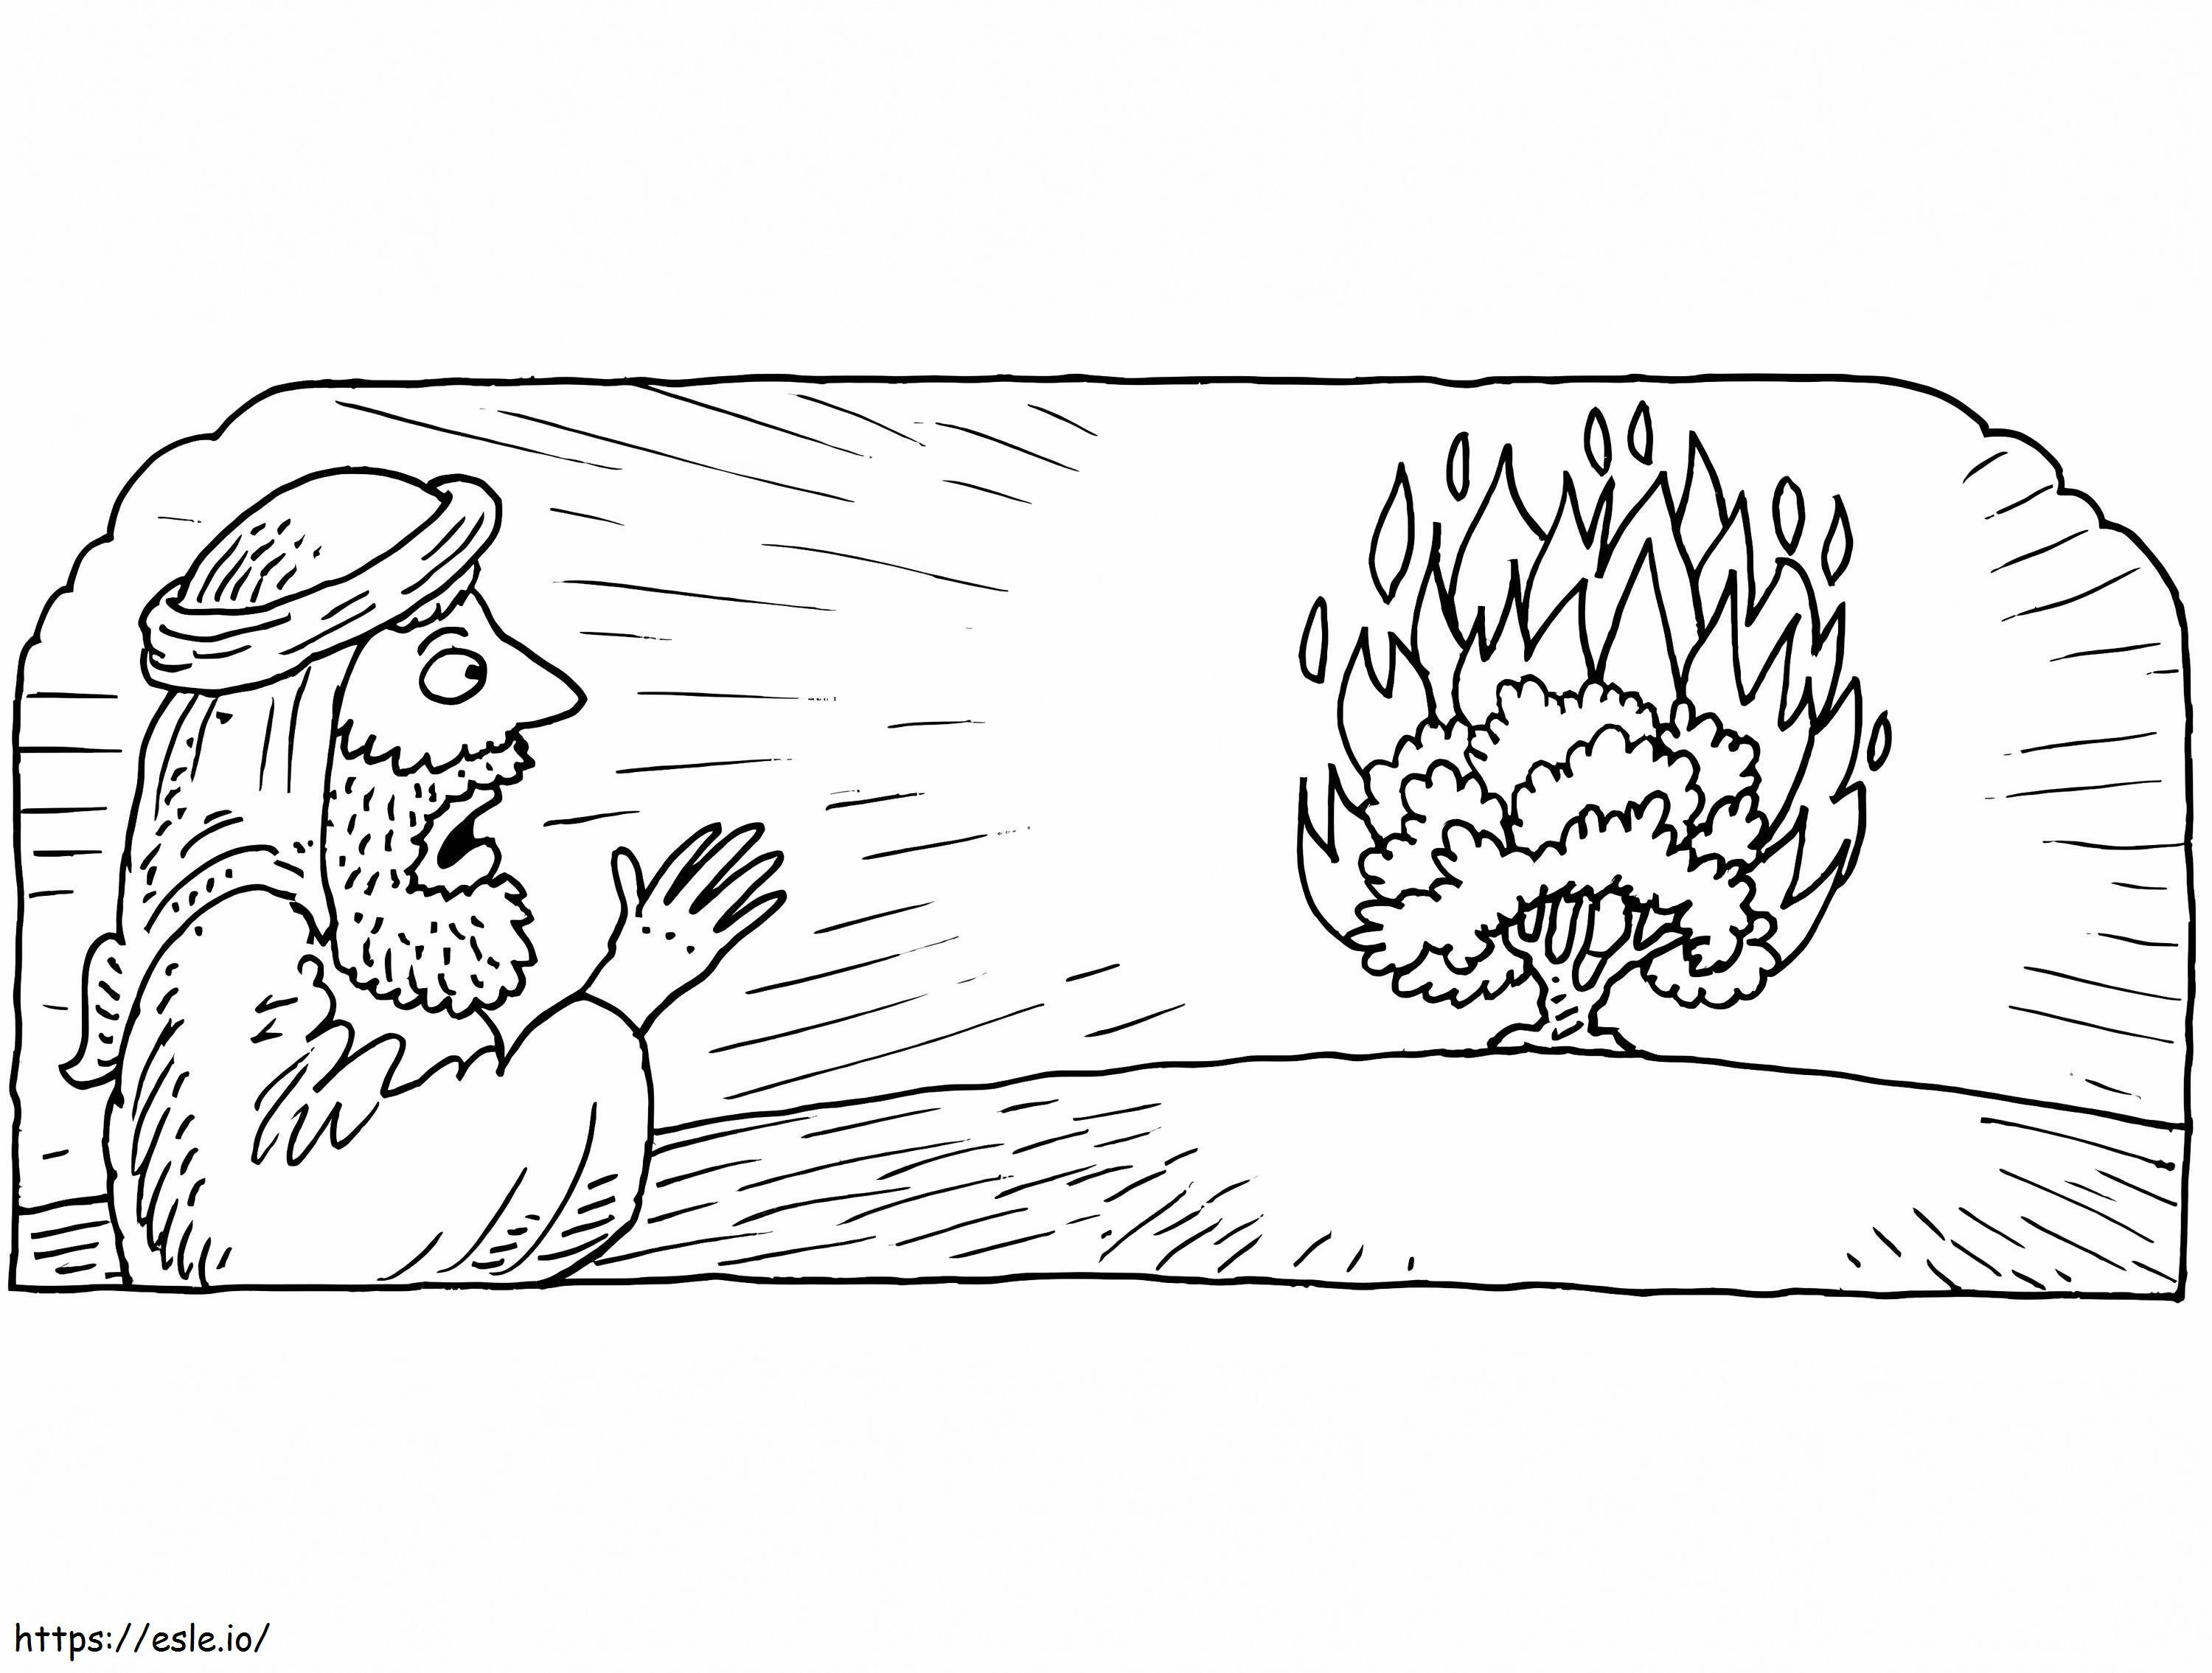 Burning Bush Bible coloring page